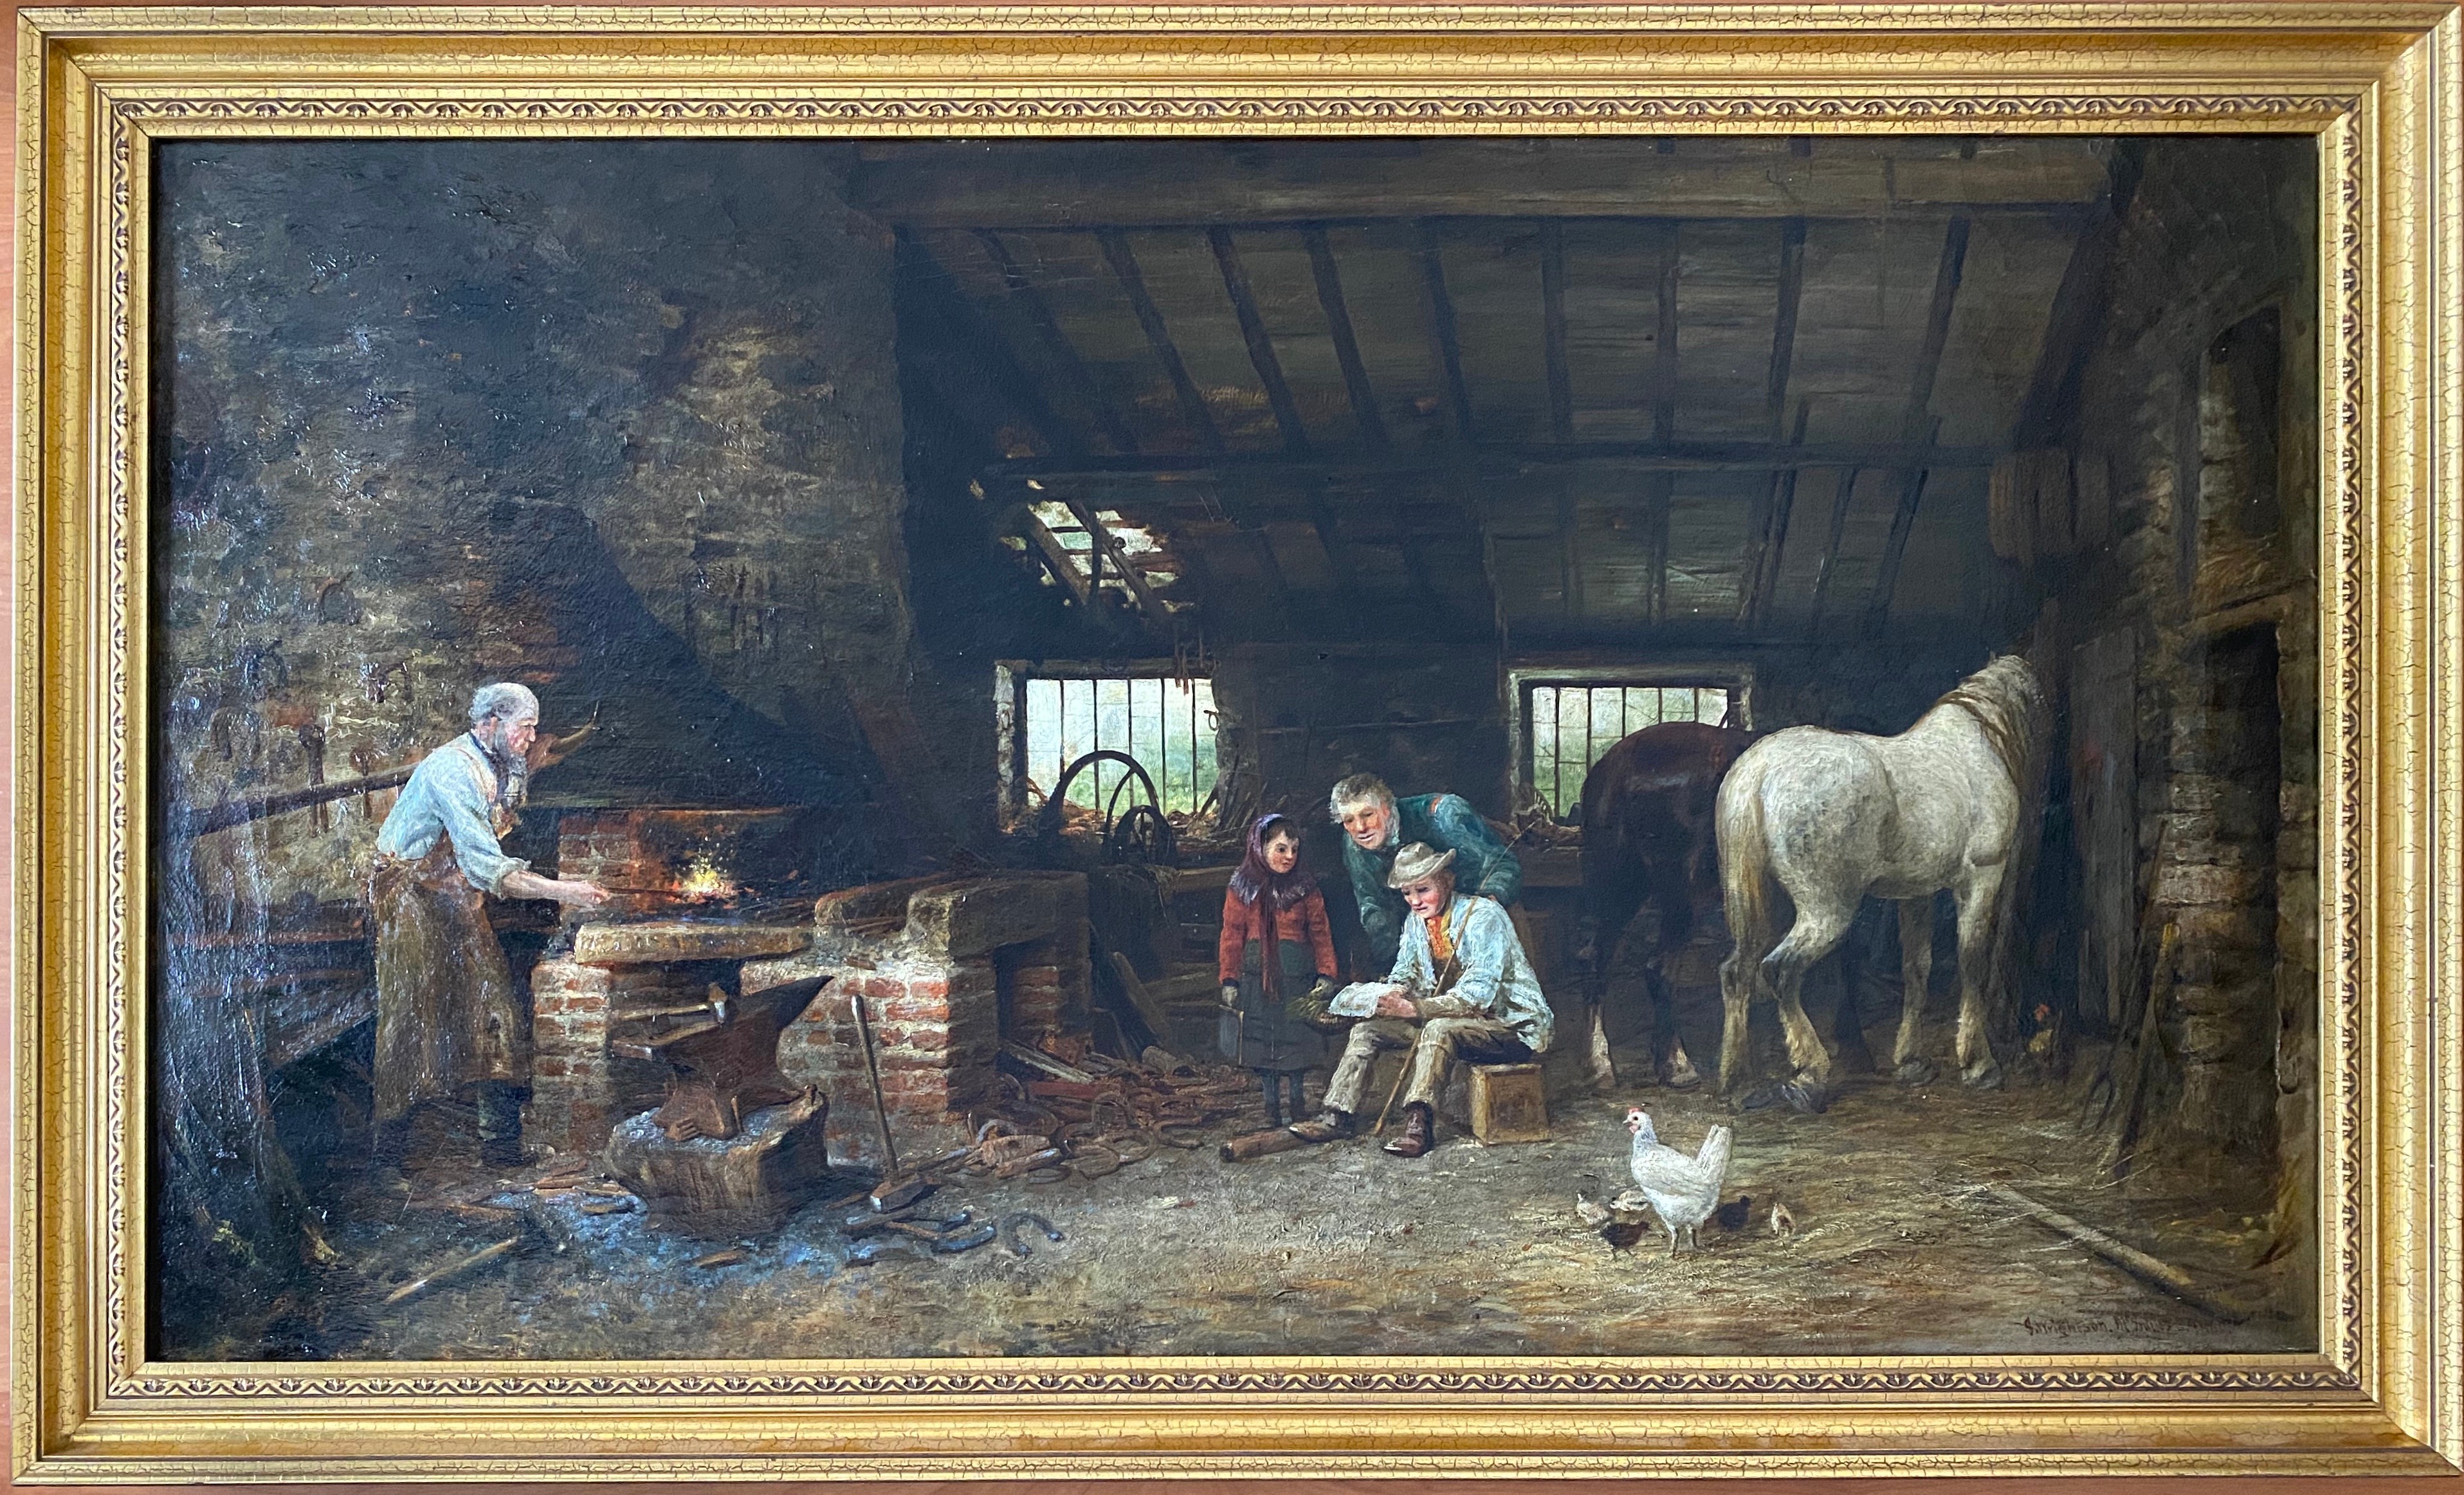 Joseph Wrightson McIntyre fl 1866-1888. British. Oil on canvas. “The Village Smithy”.